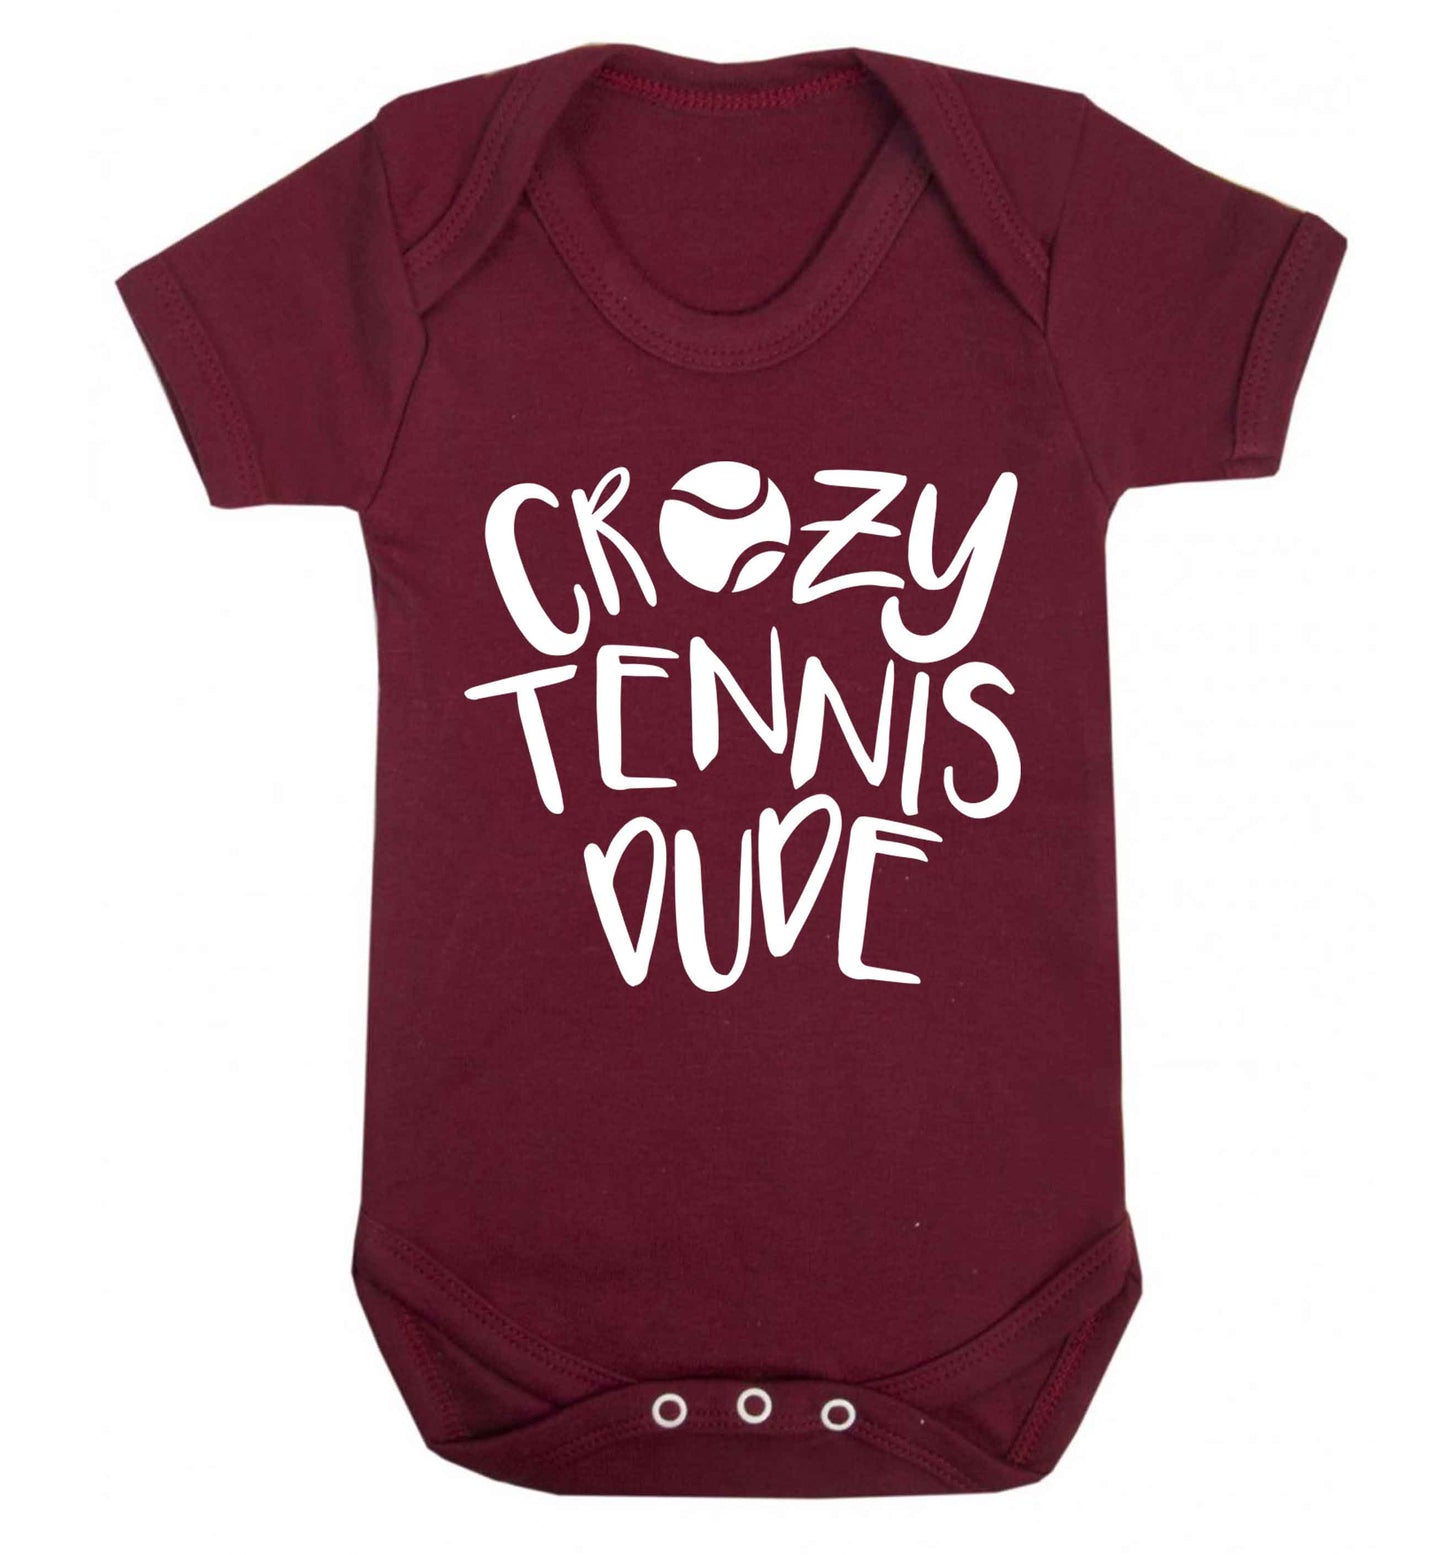 Crazy tennis dude Baby Vest maroon 18-24 months